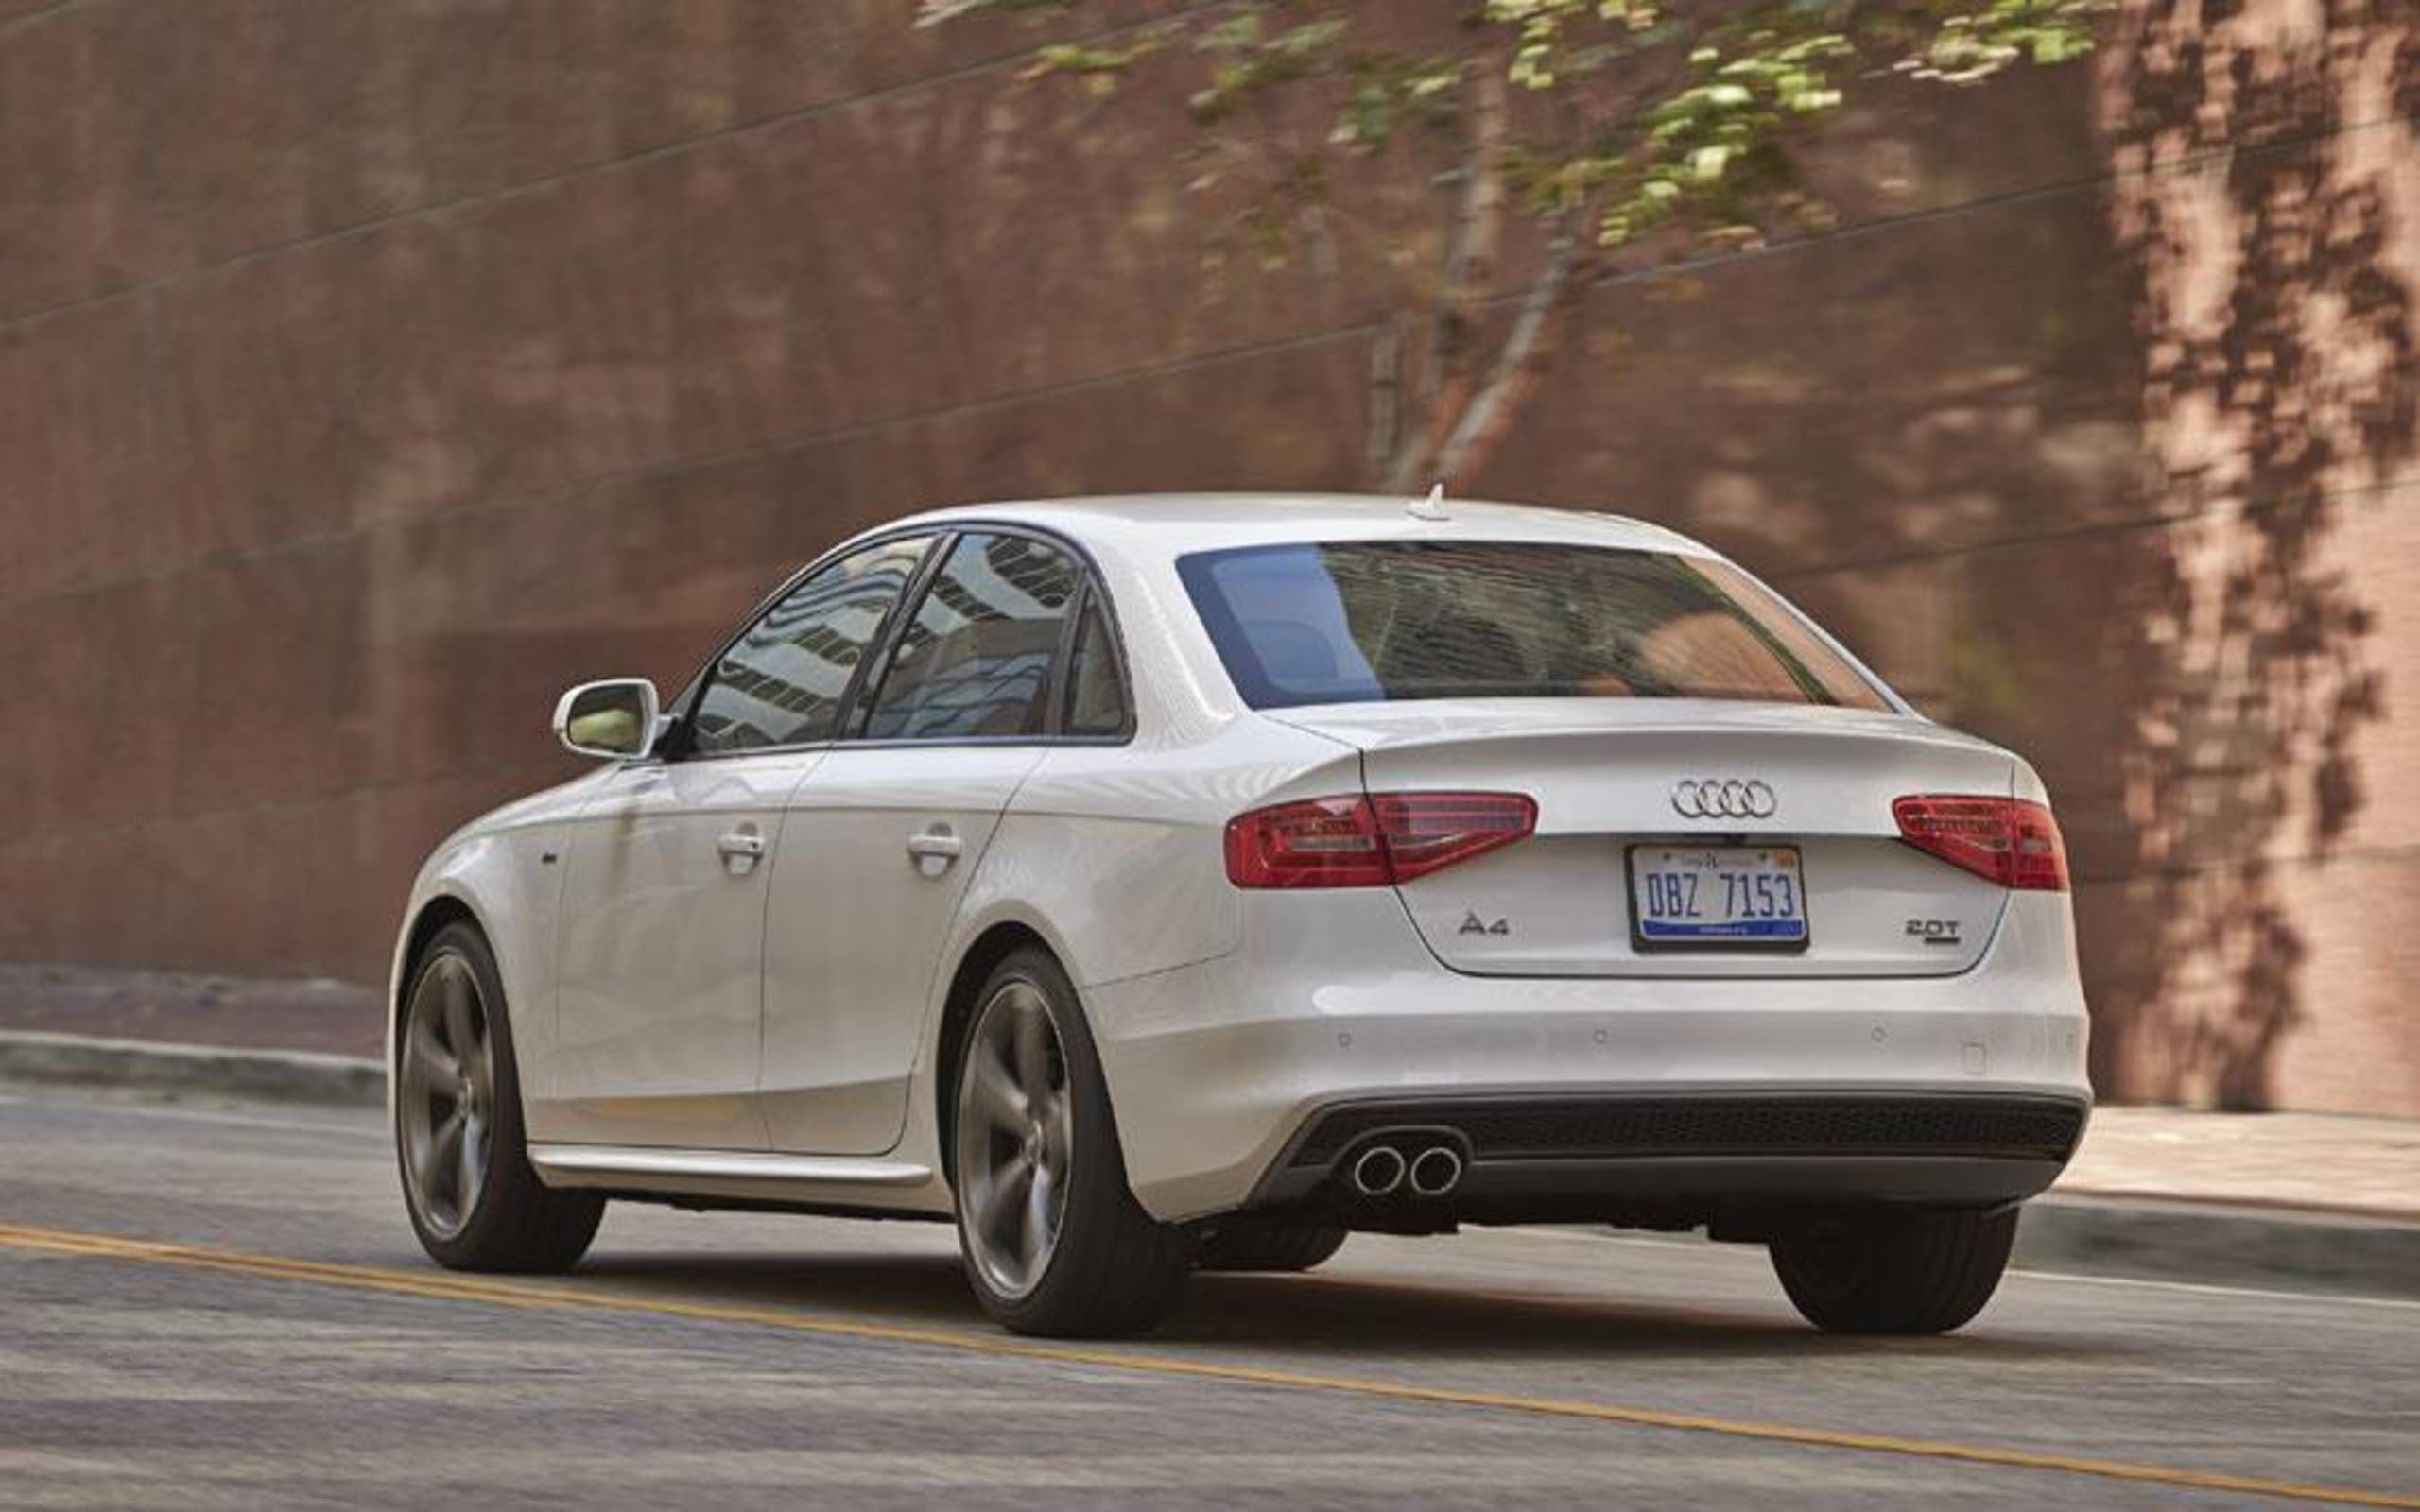 Audi 2.0 TFSI Premium Plus review notes